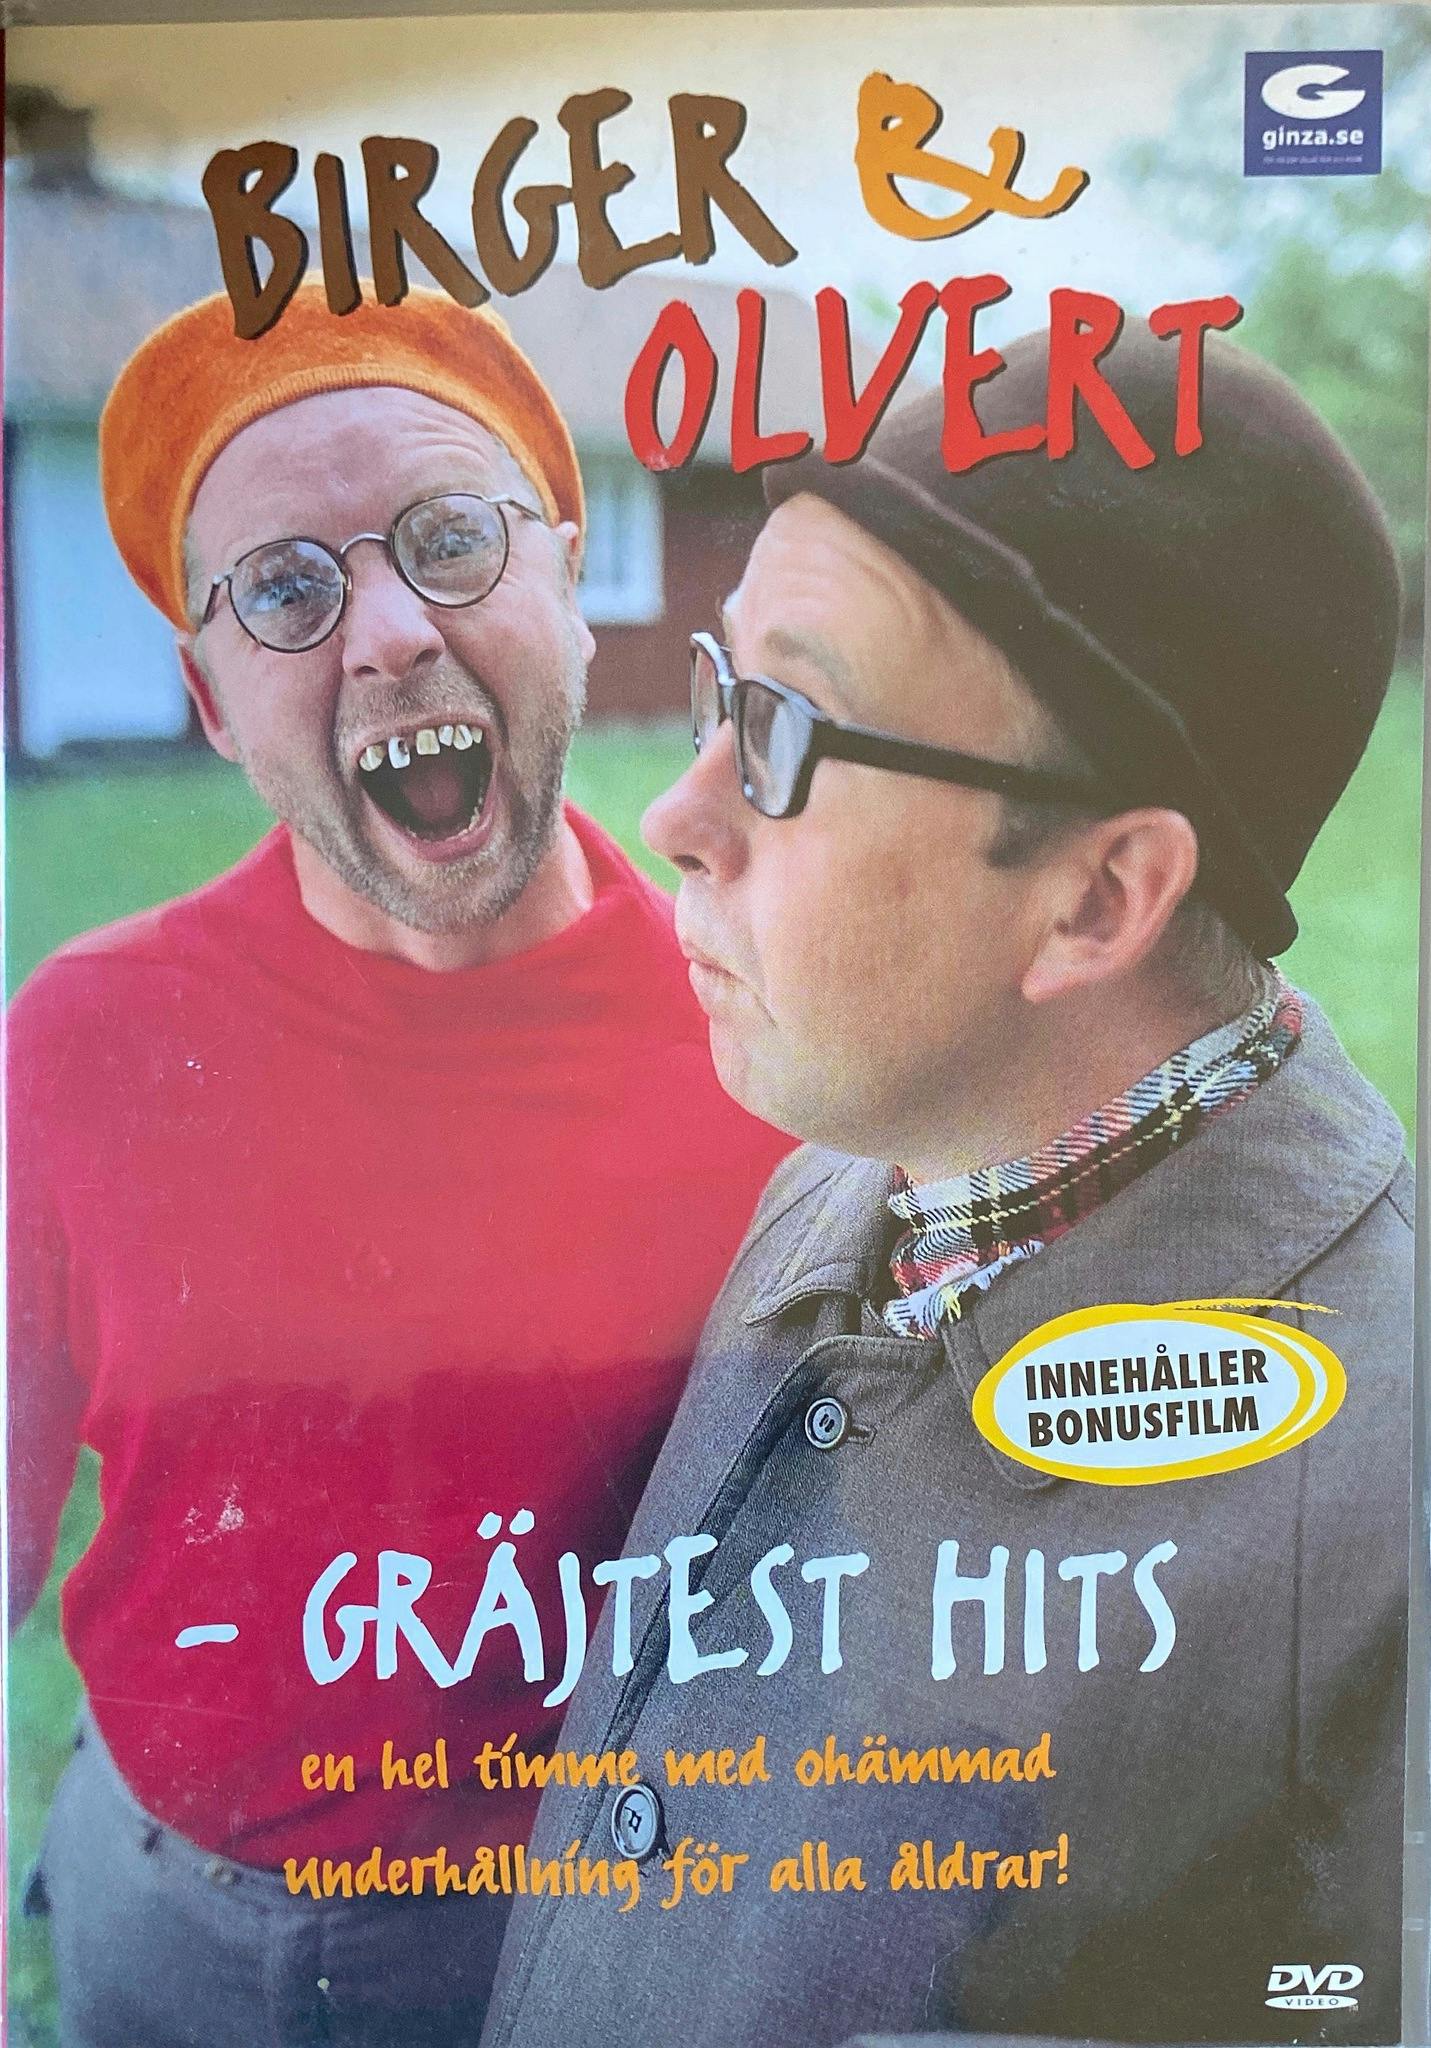 Birger Och Olvert Gräjtest Hits (DVD Slimcase Promo)